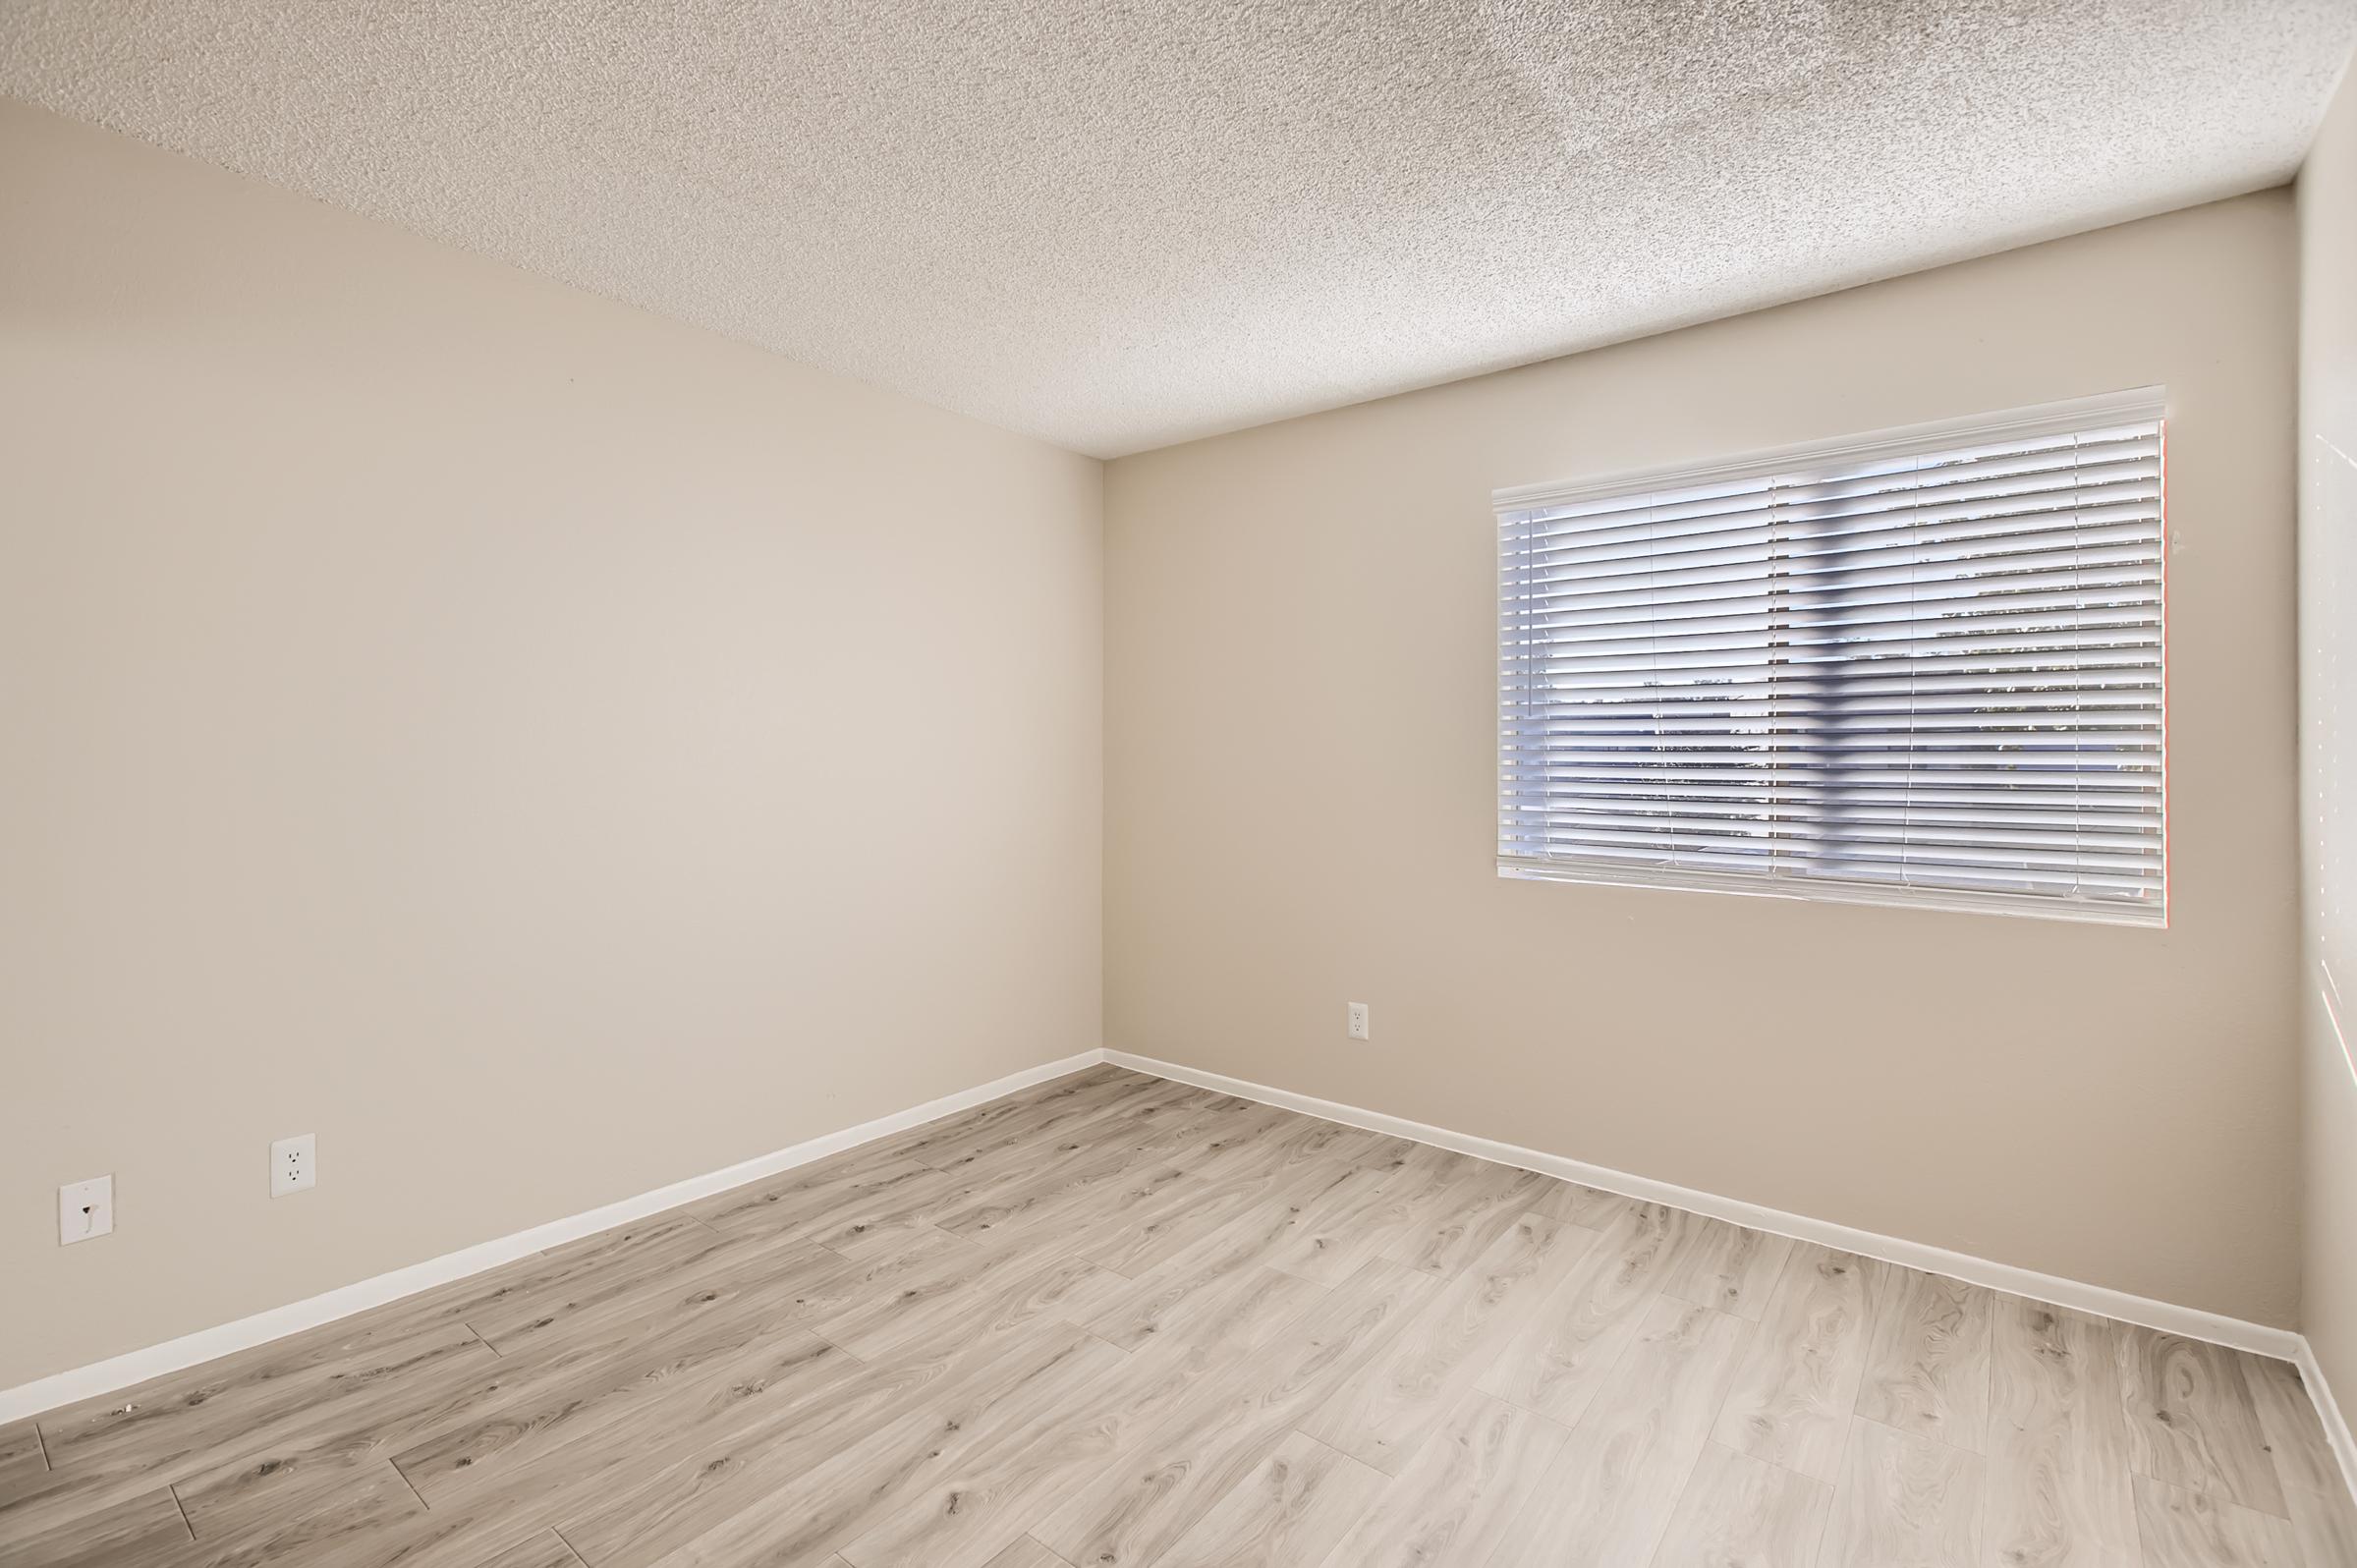 Phoenix, AZ apartment bedroom with beige walls, hardwood floors and a window